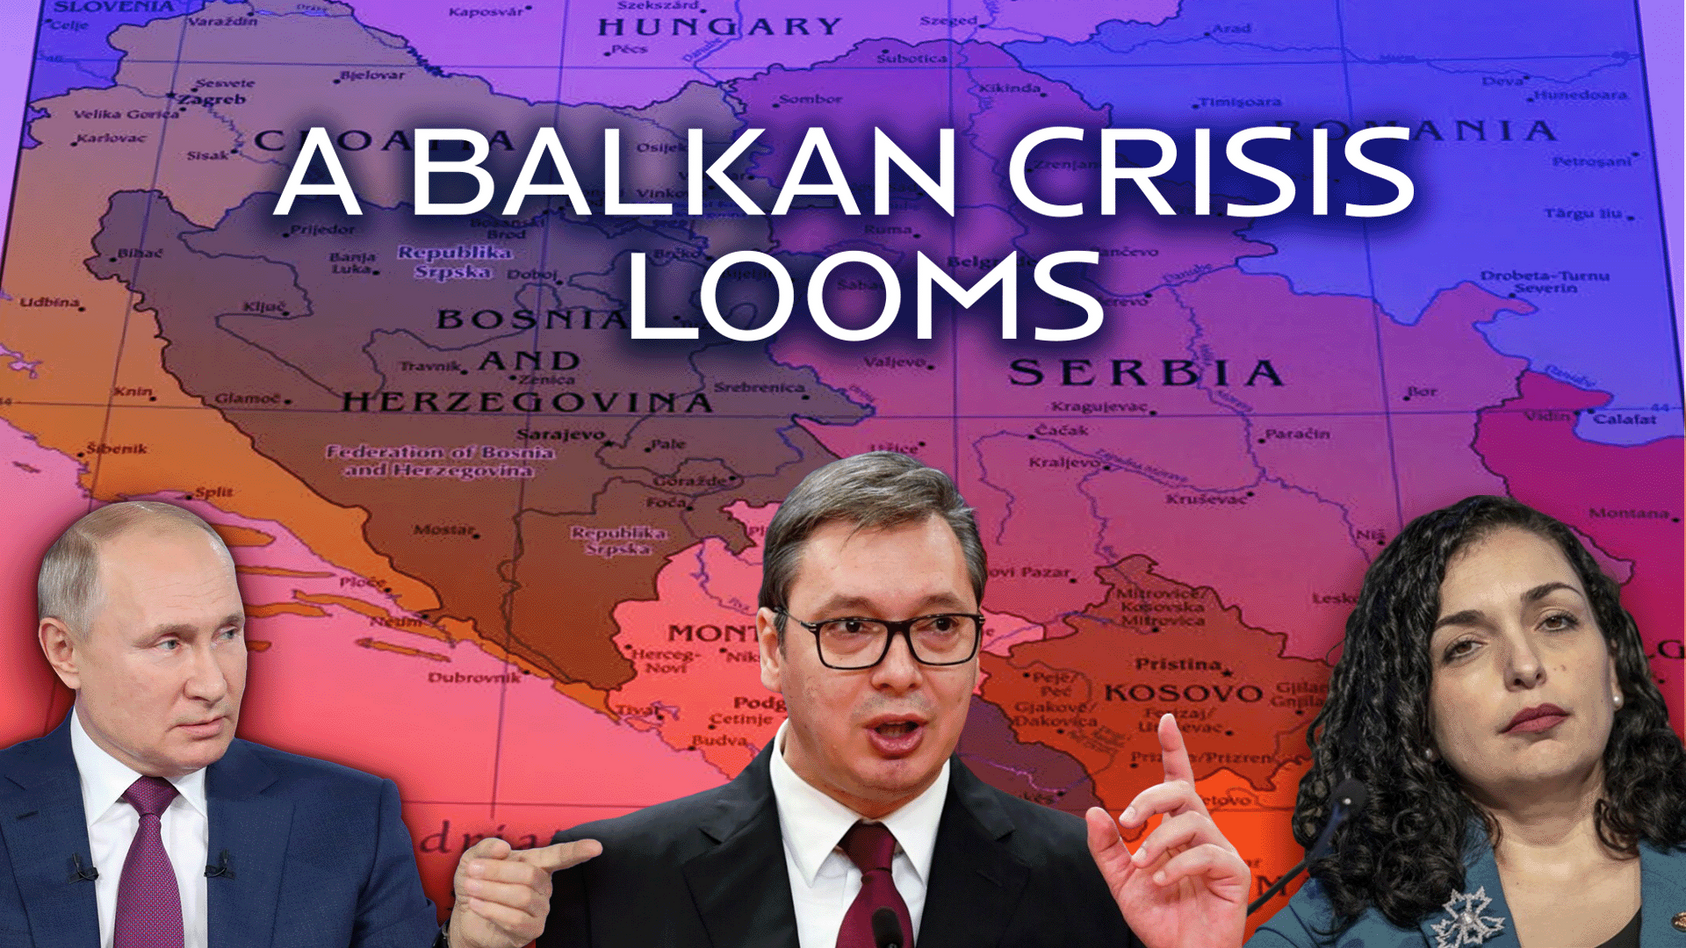 A Balkan Crisis Looms